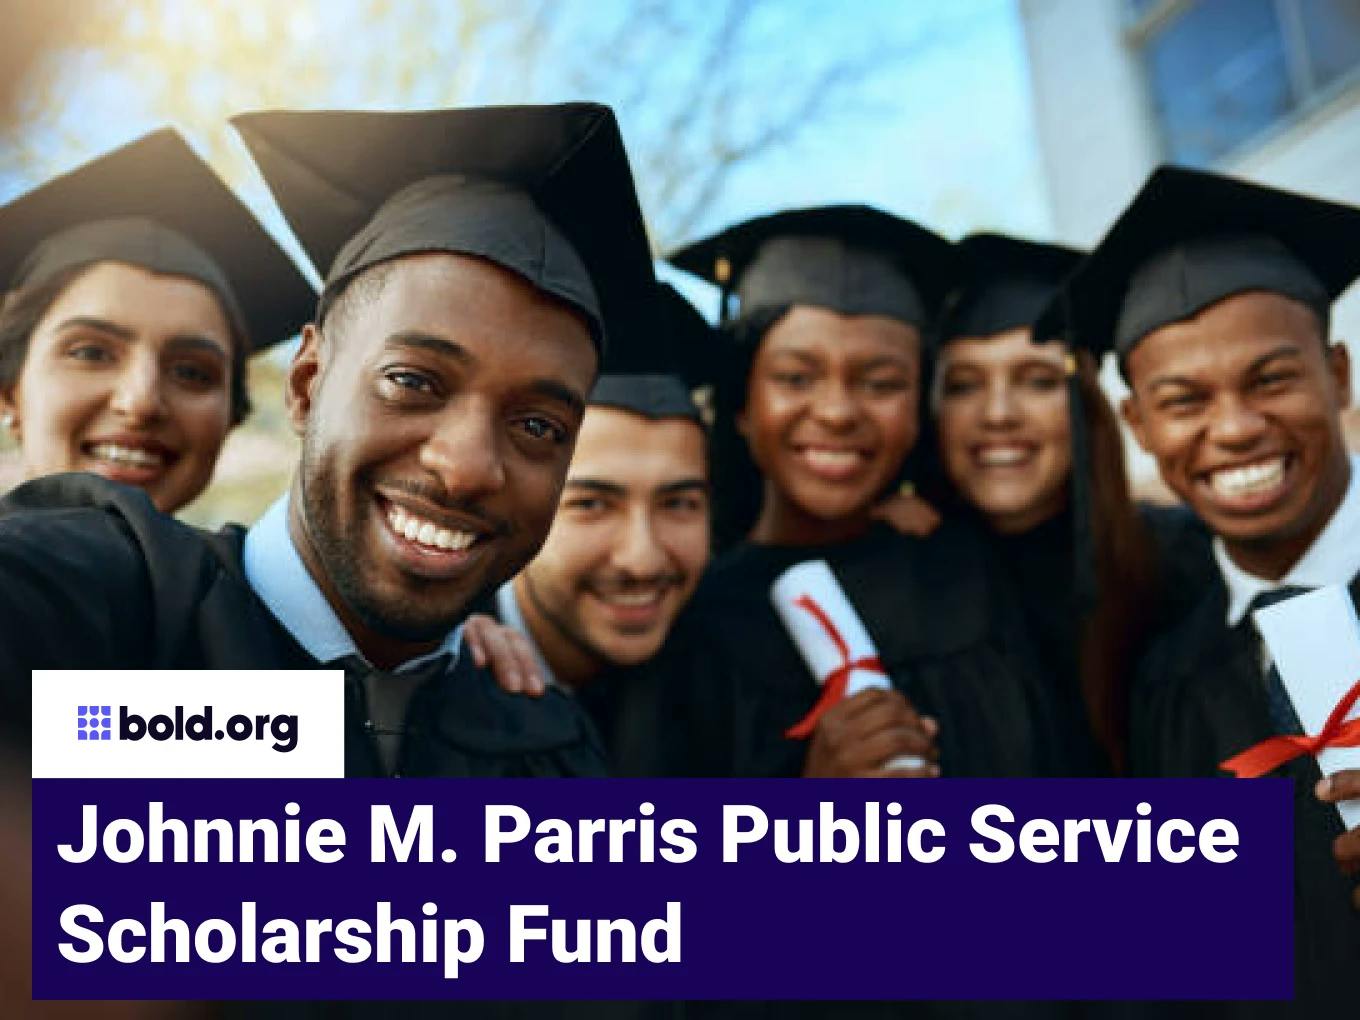 Johnnie M. Parris Public Service Scholarship Fund